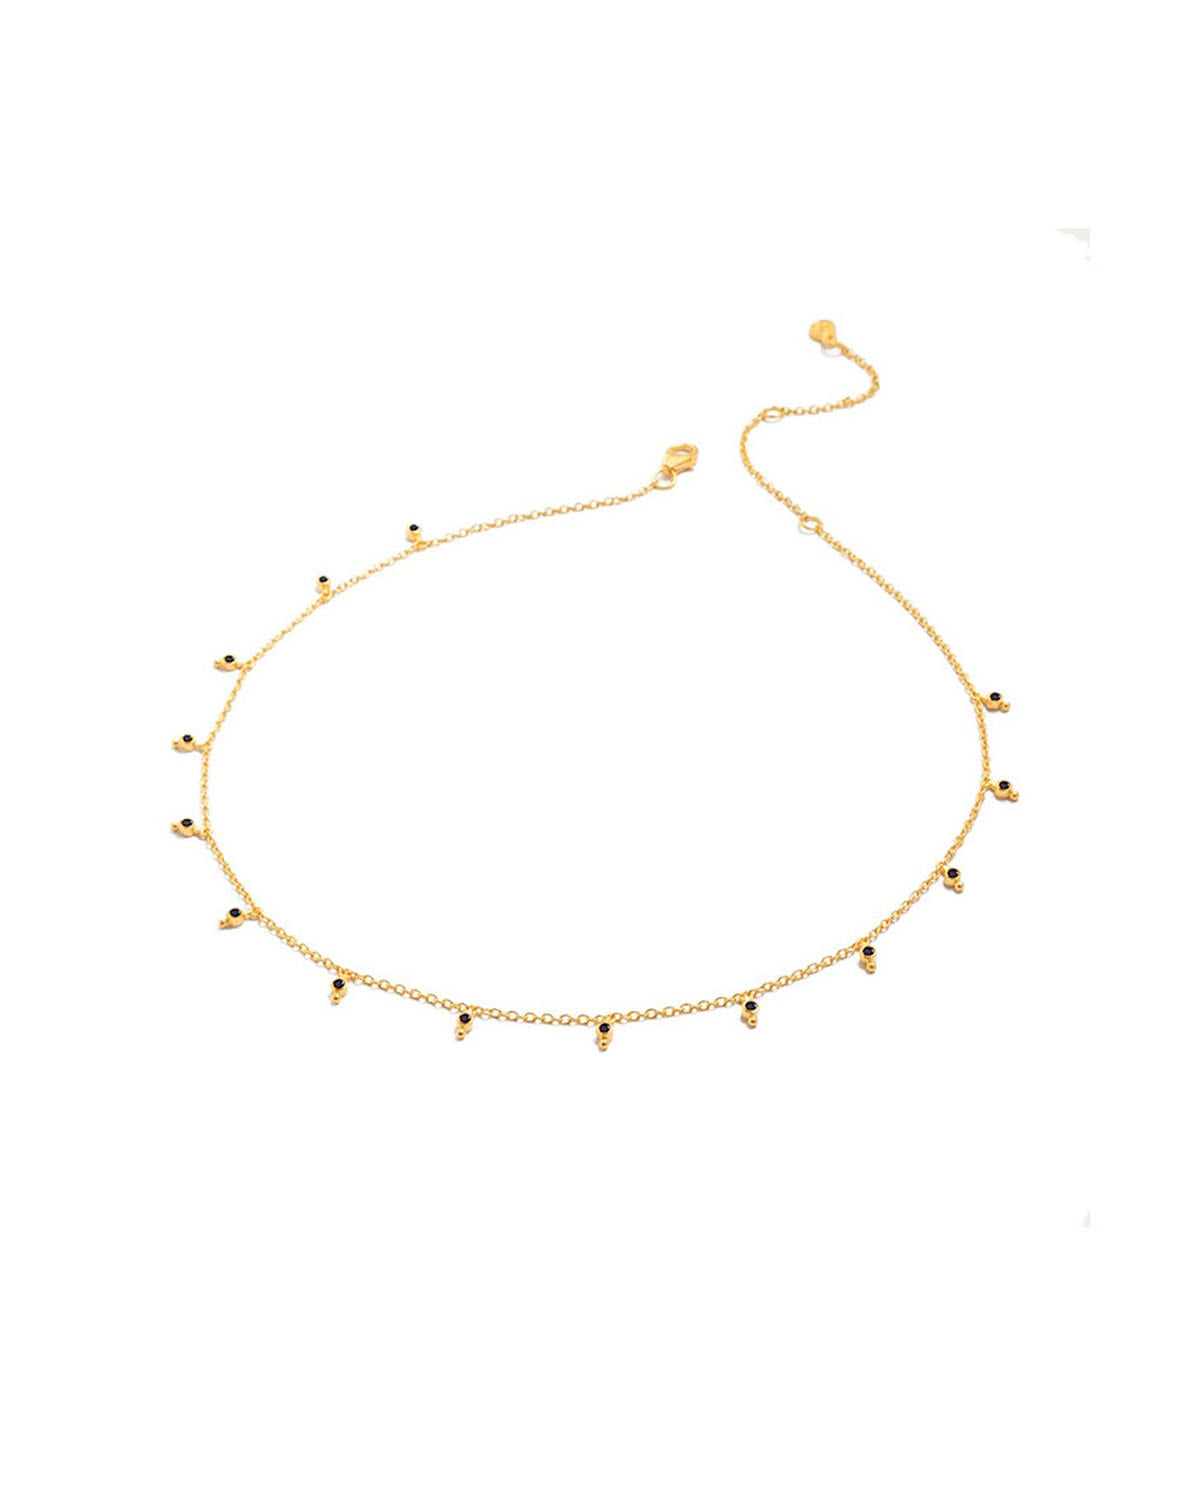 Super Paver Black Spinel Gold Necklace - Moon London